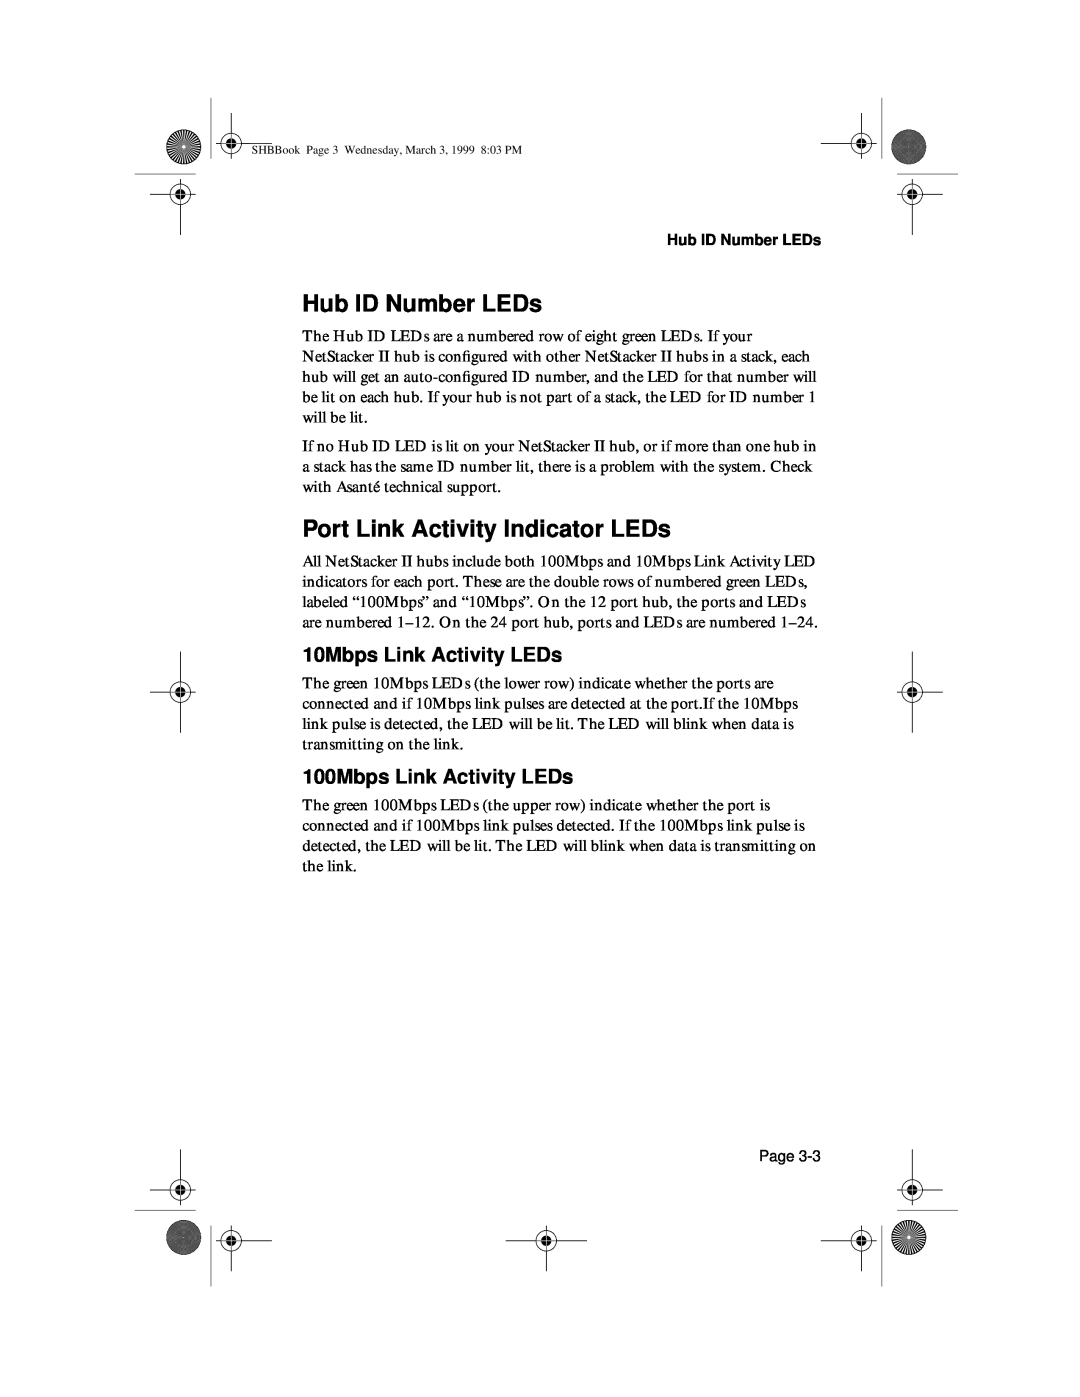 Asante Technologies II user manual Hub ID Number LEDs, Port Link Activity Indicator LEDs, 10Mbps Link Activity LEDs 